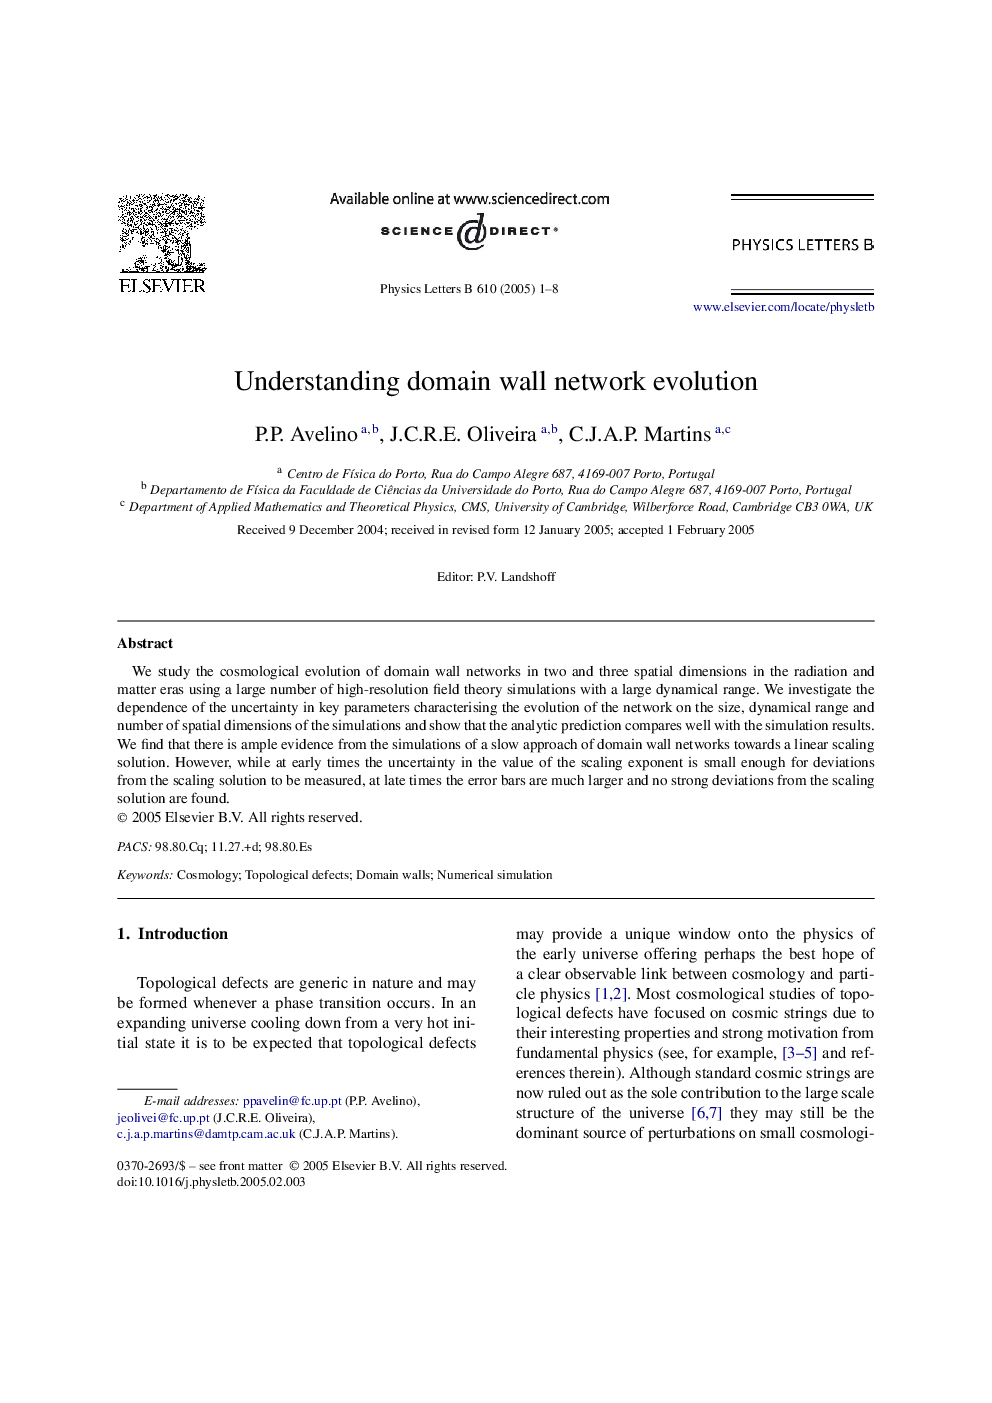 Understanding domain wall network evolution